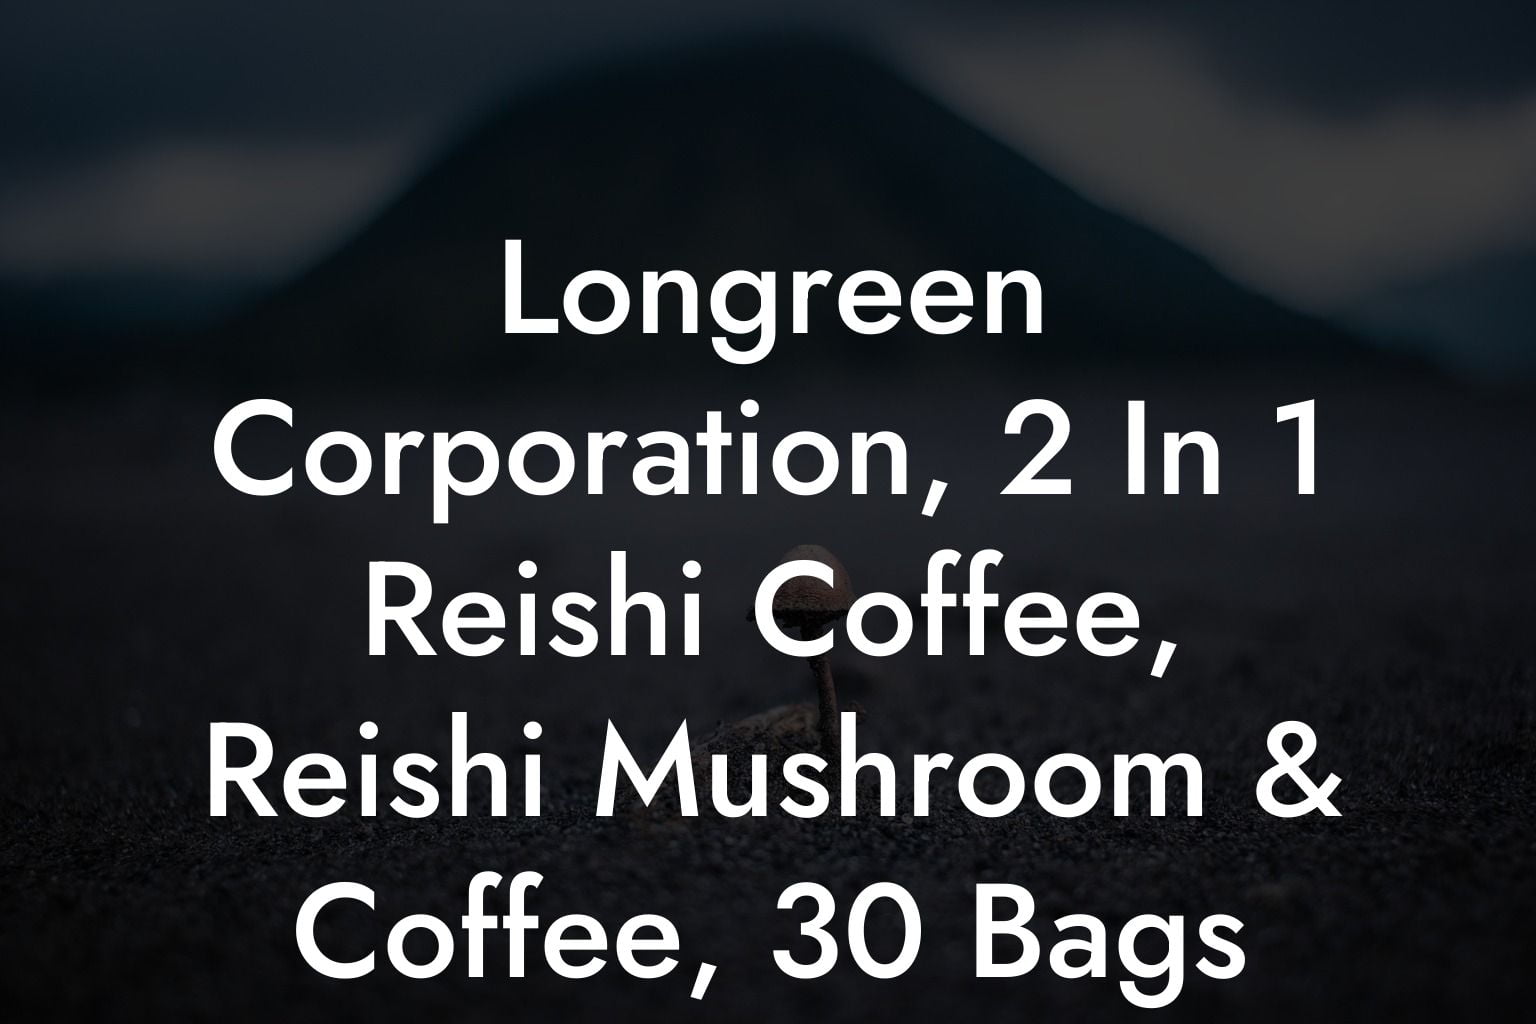 Longreen Corporation, 2 In 1 Reishi Coffee, Reishi Mushroom & Coffee, 30 Bags